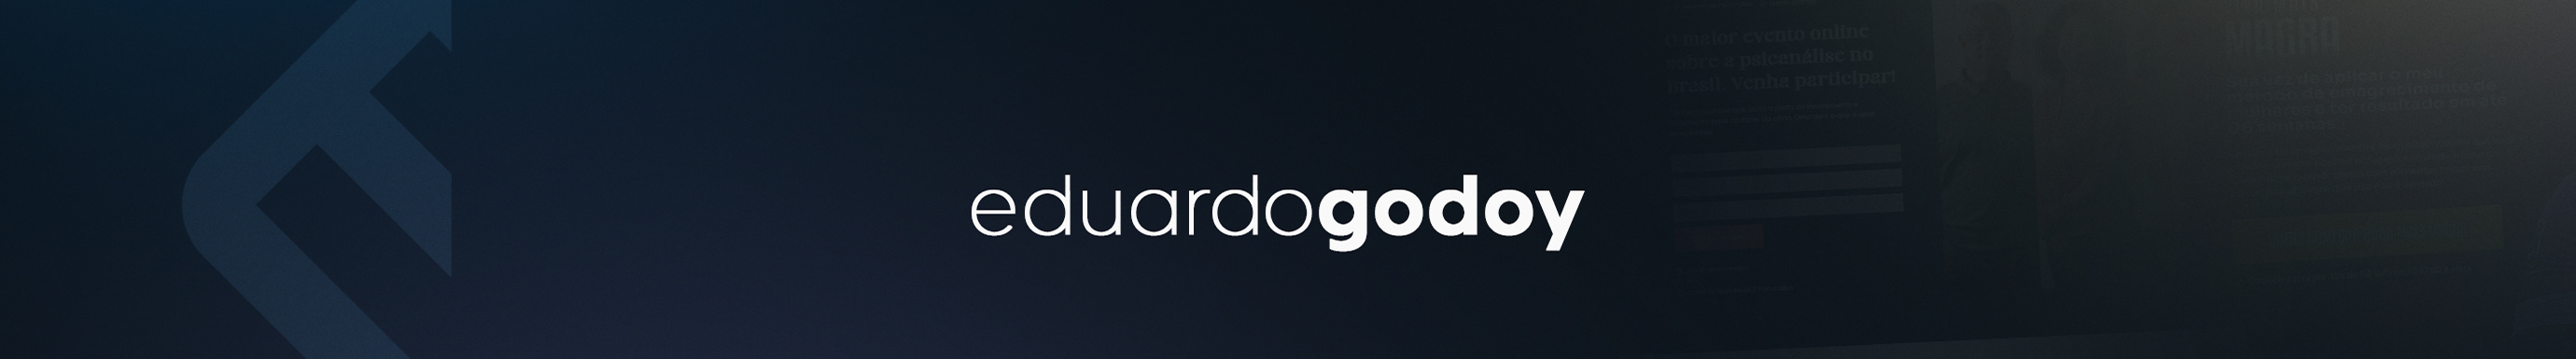 Eduardo Godoy's profile banner